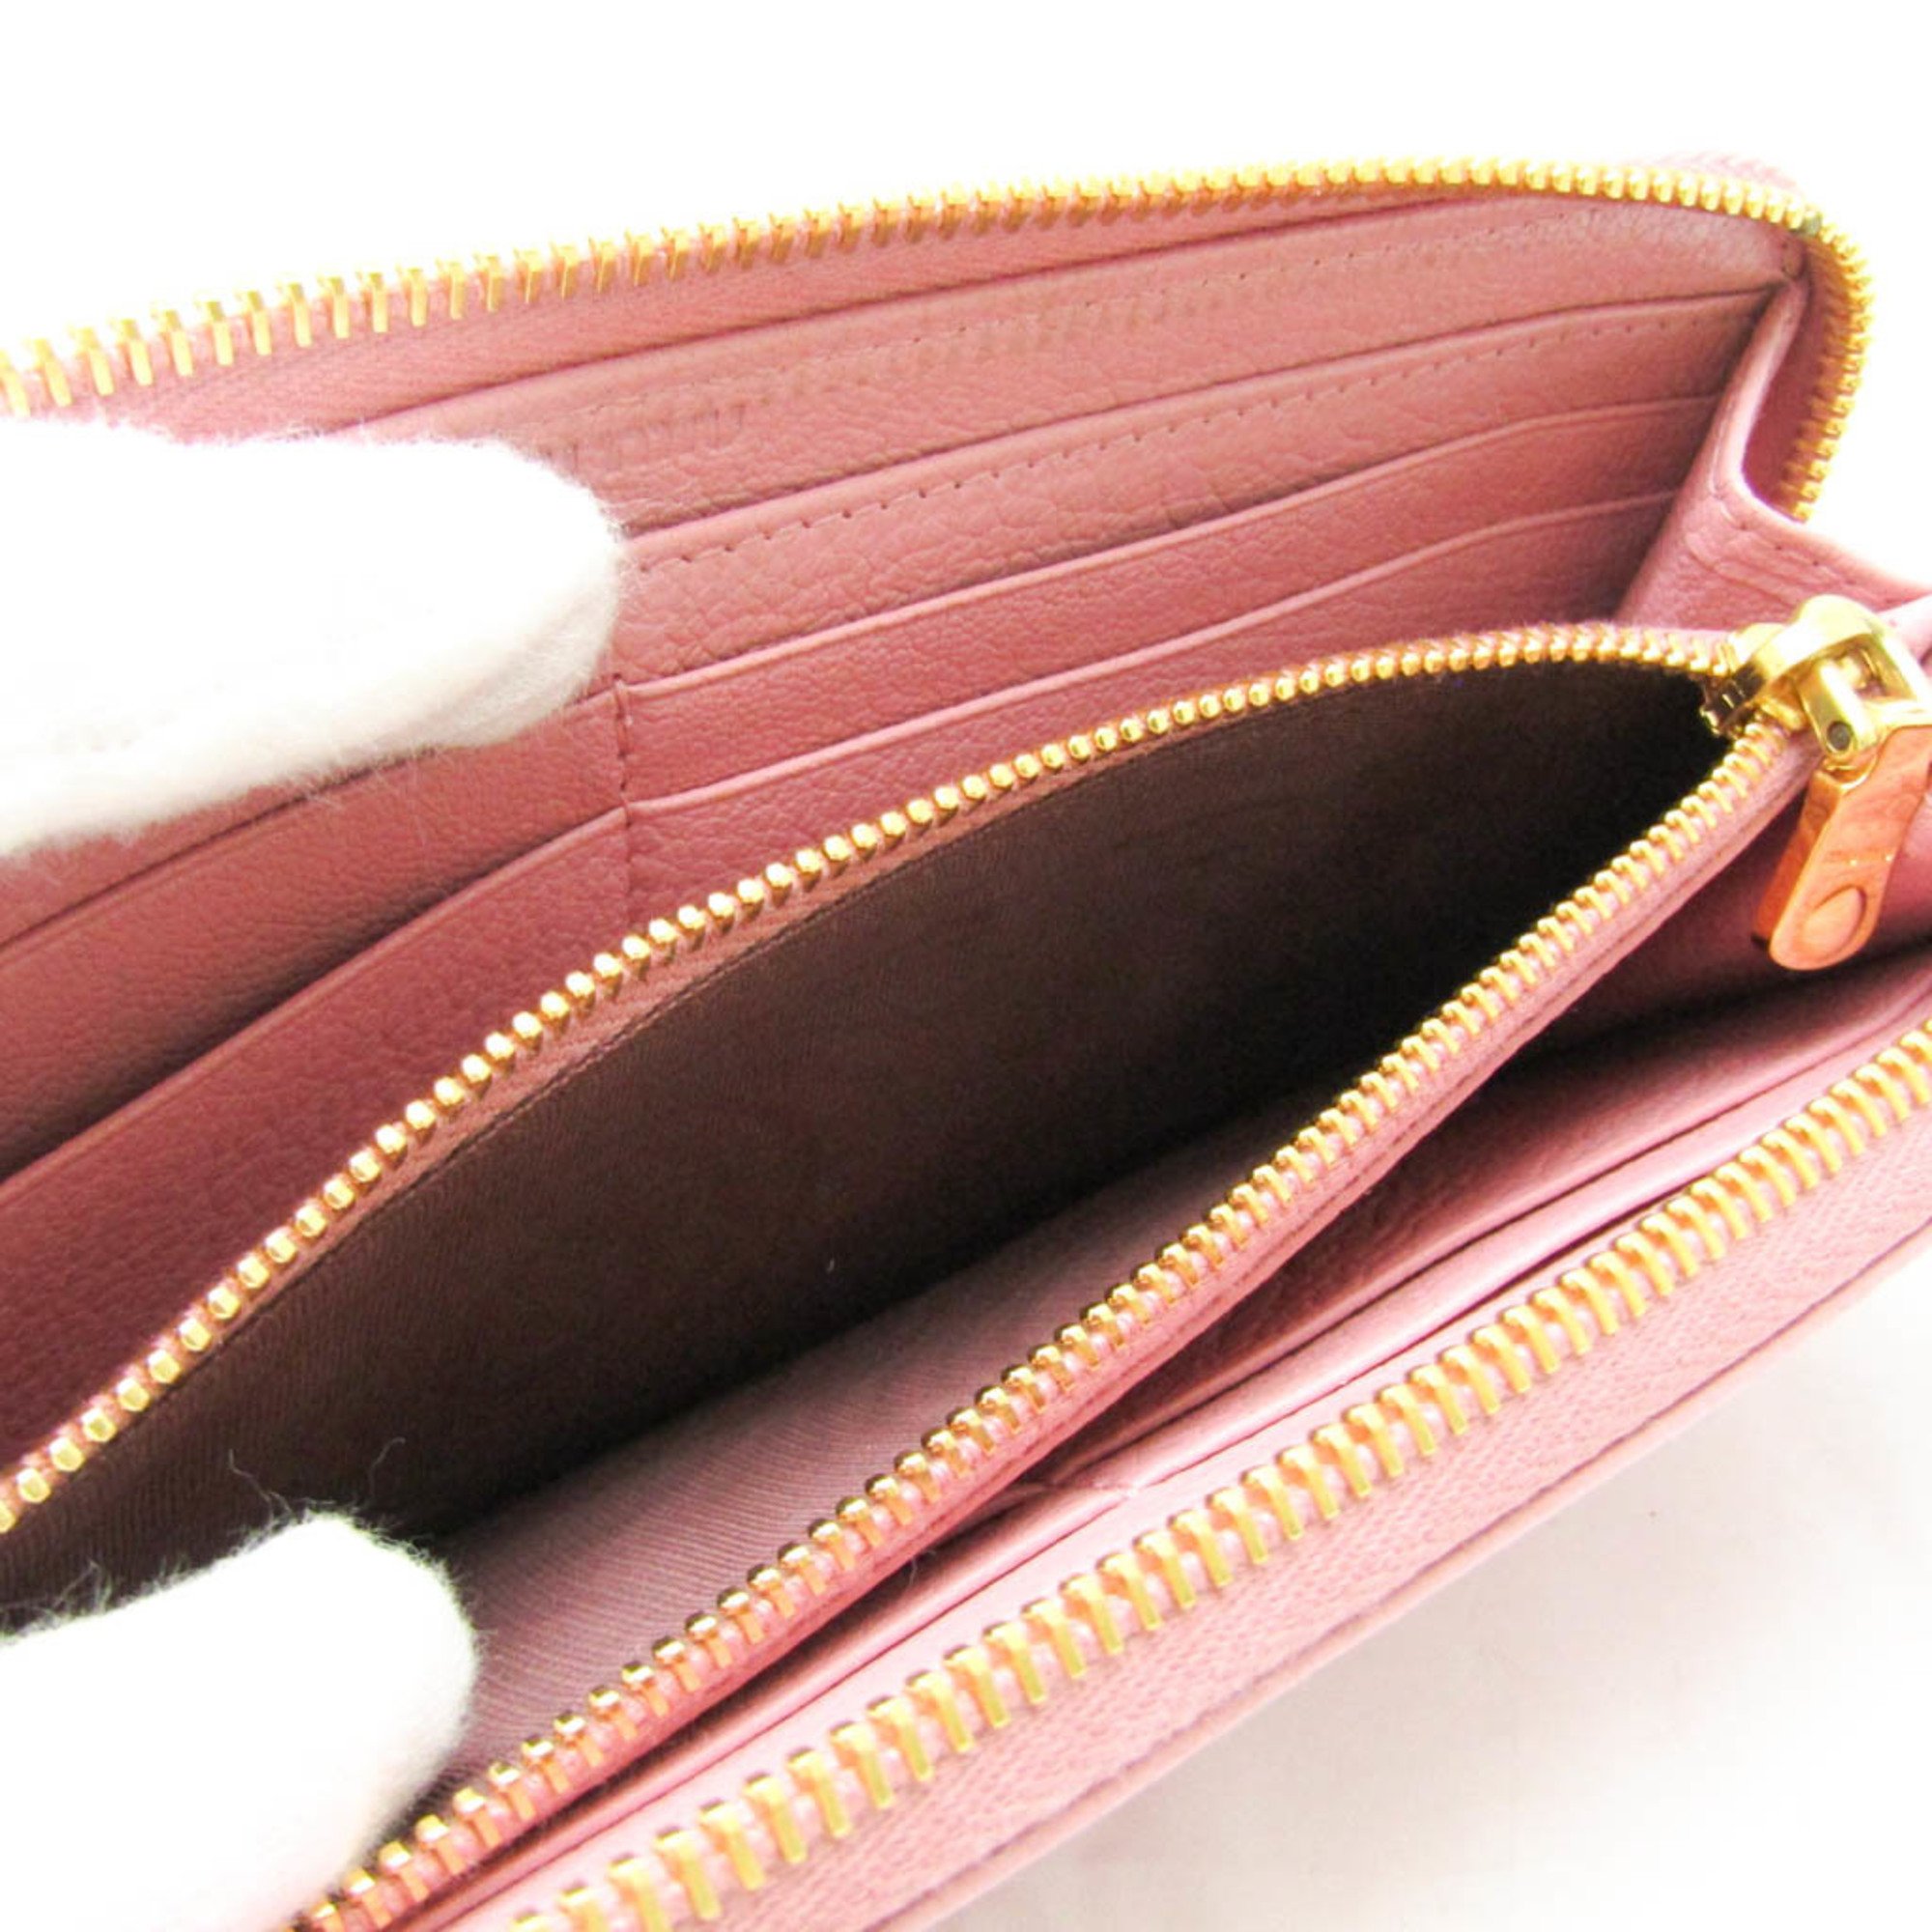 Miu Miu MADRAS 5M1183 Women's Leather Long Wallet (bi-fold) Pink